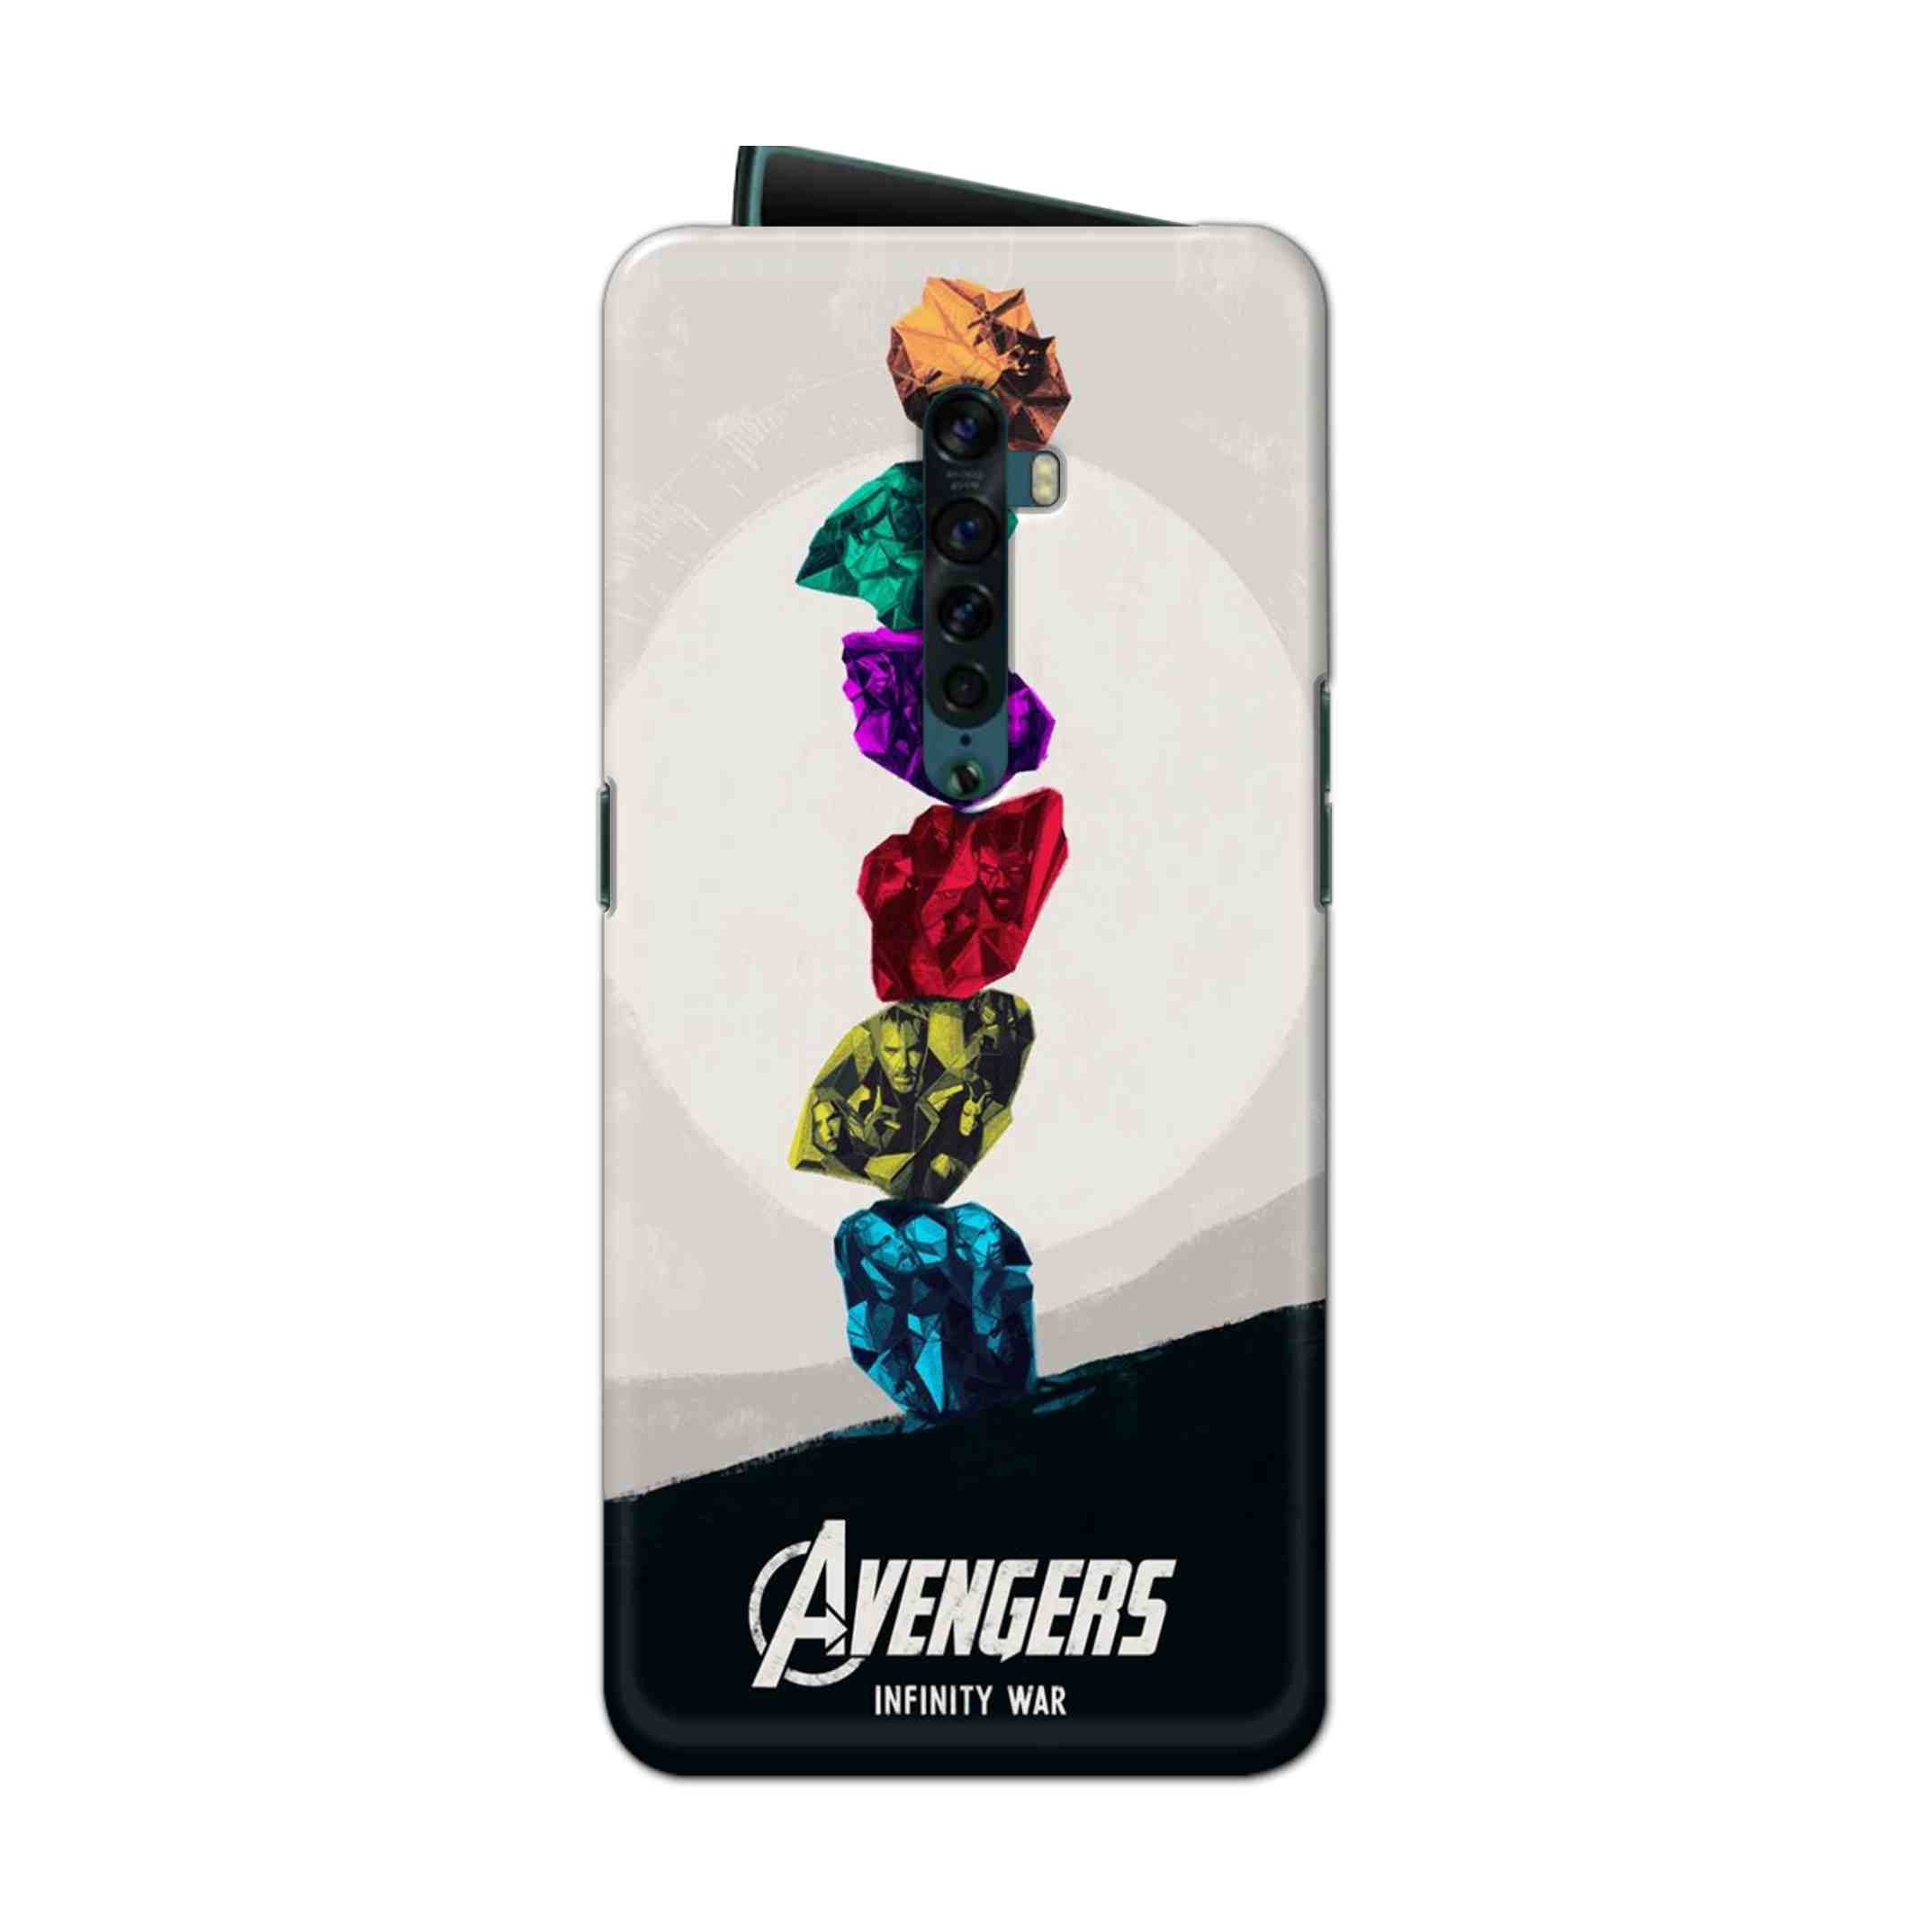 Buy Avengers Stone Hard Back Mobile Phone Case Cover For Oppo Reno 2 Online